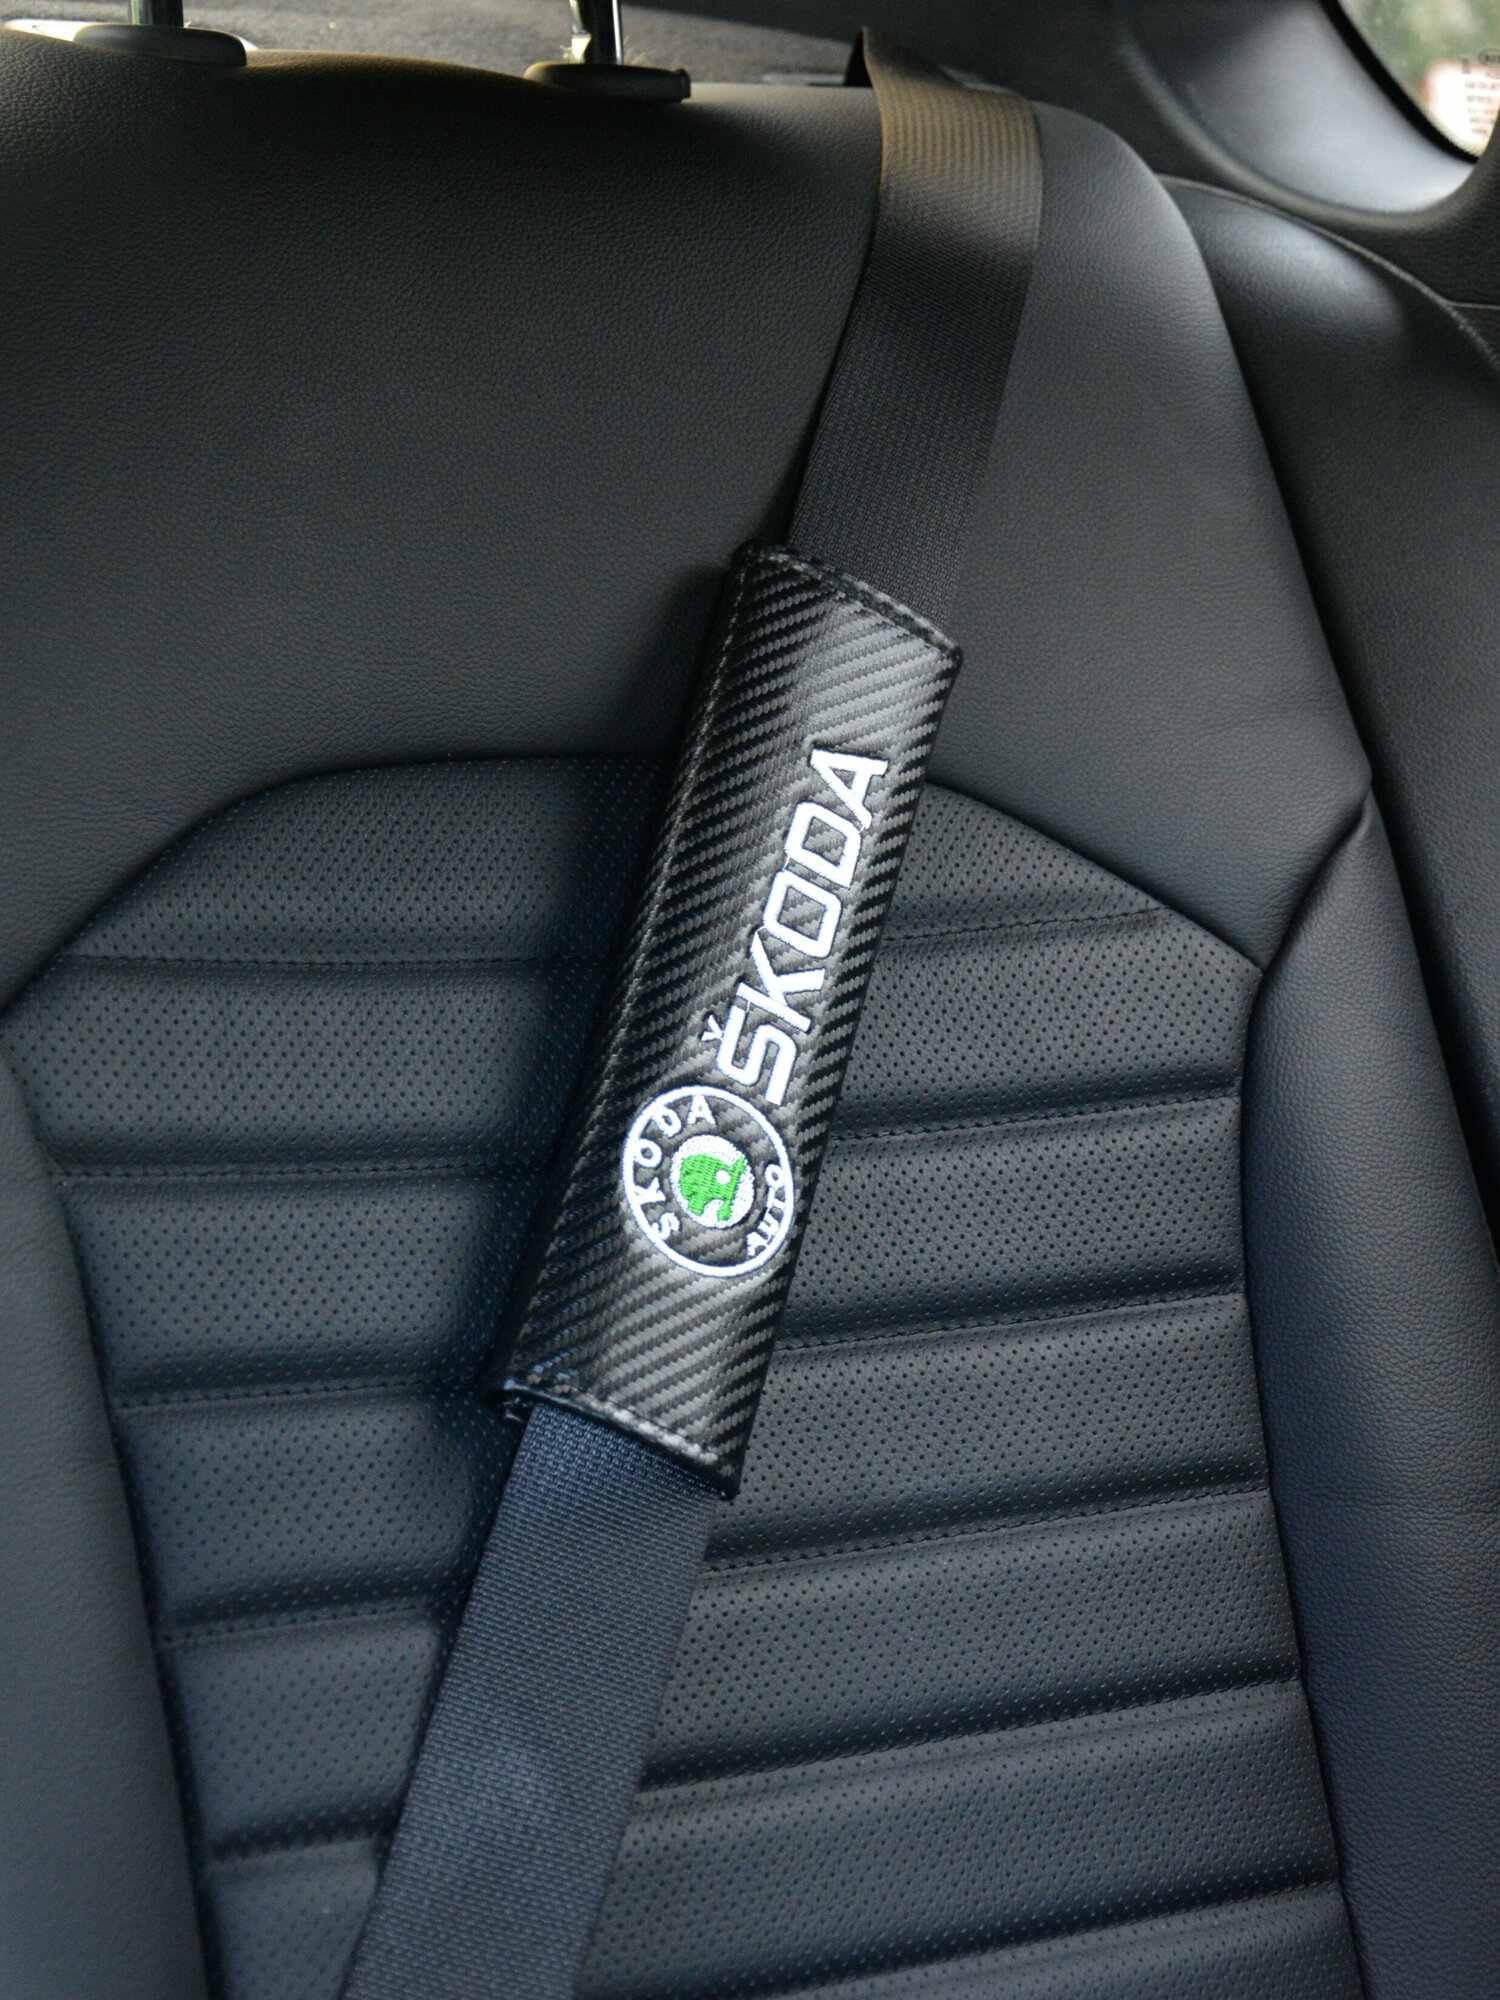 Чехол на ремень безопасности автомобиля (2шт) мягкая подкладка на ремень сумки накидка на плечо насадка накладка для авто логотип "Skoda"